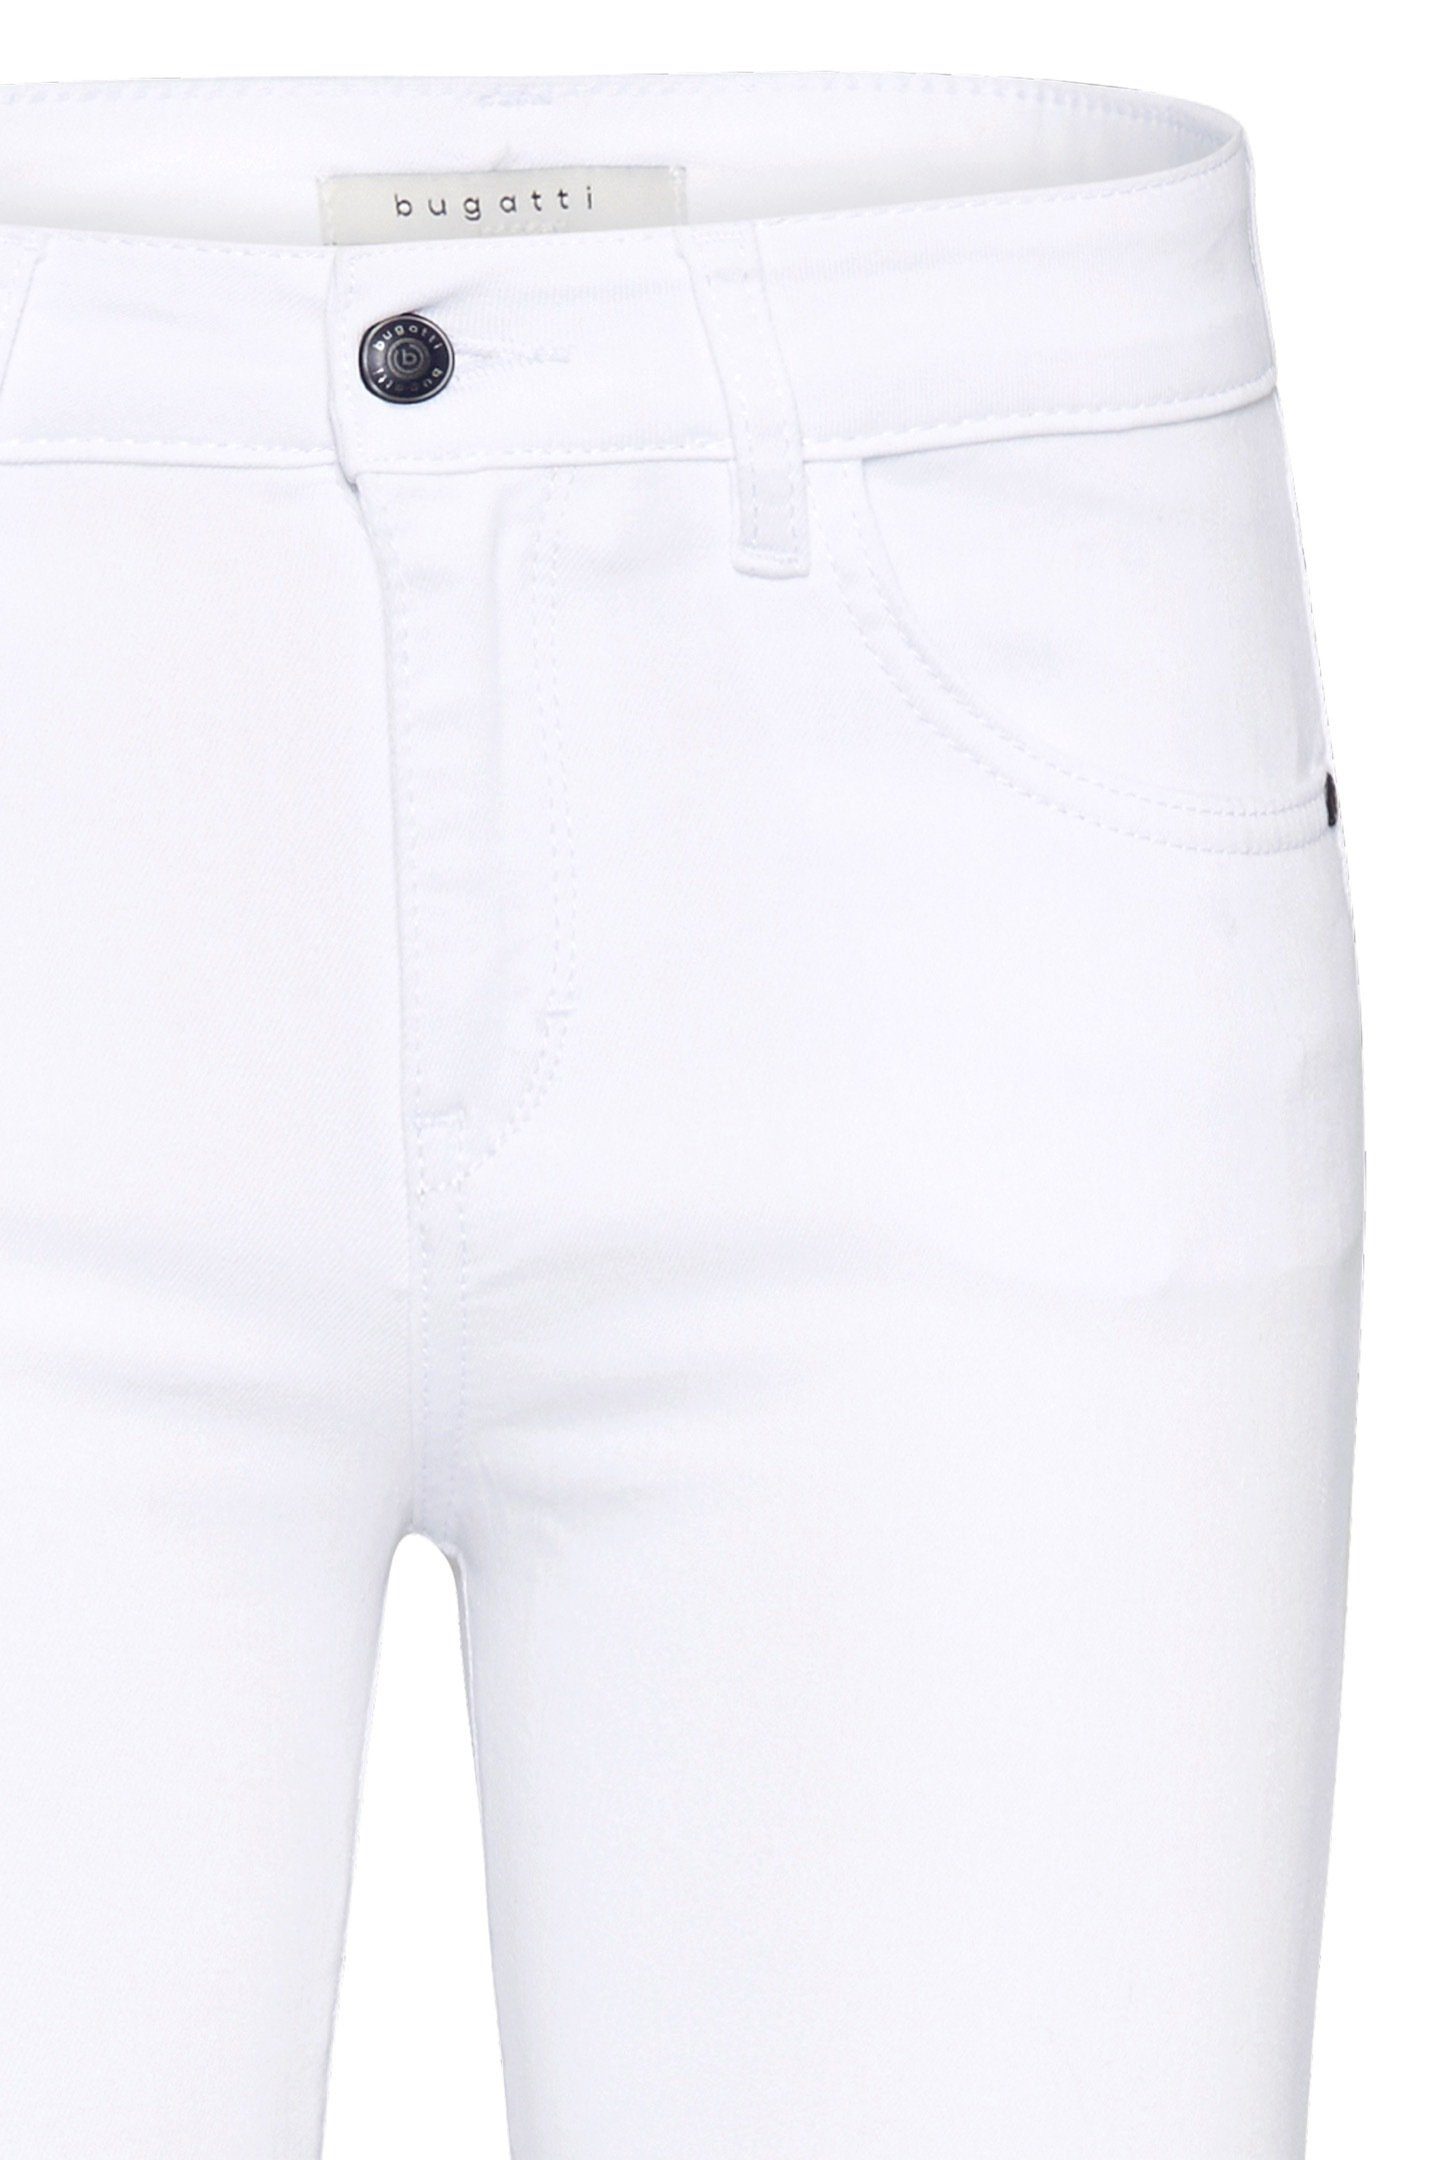 bugatti 5-Pocket-Jeans 7/8 Länge in